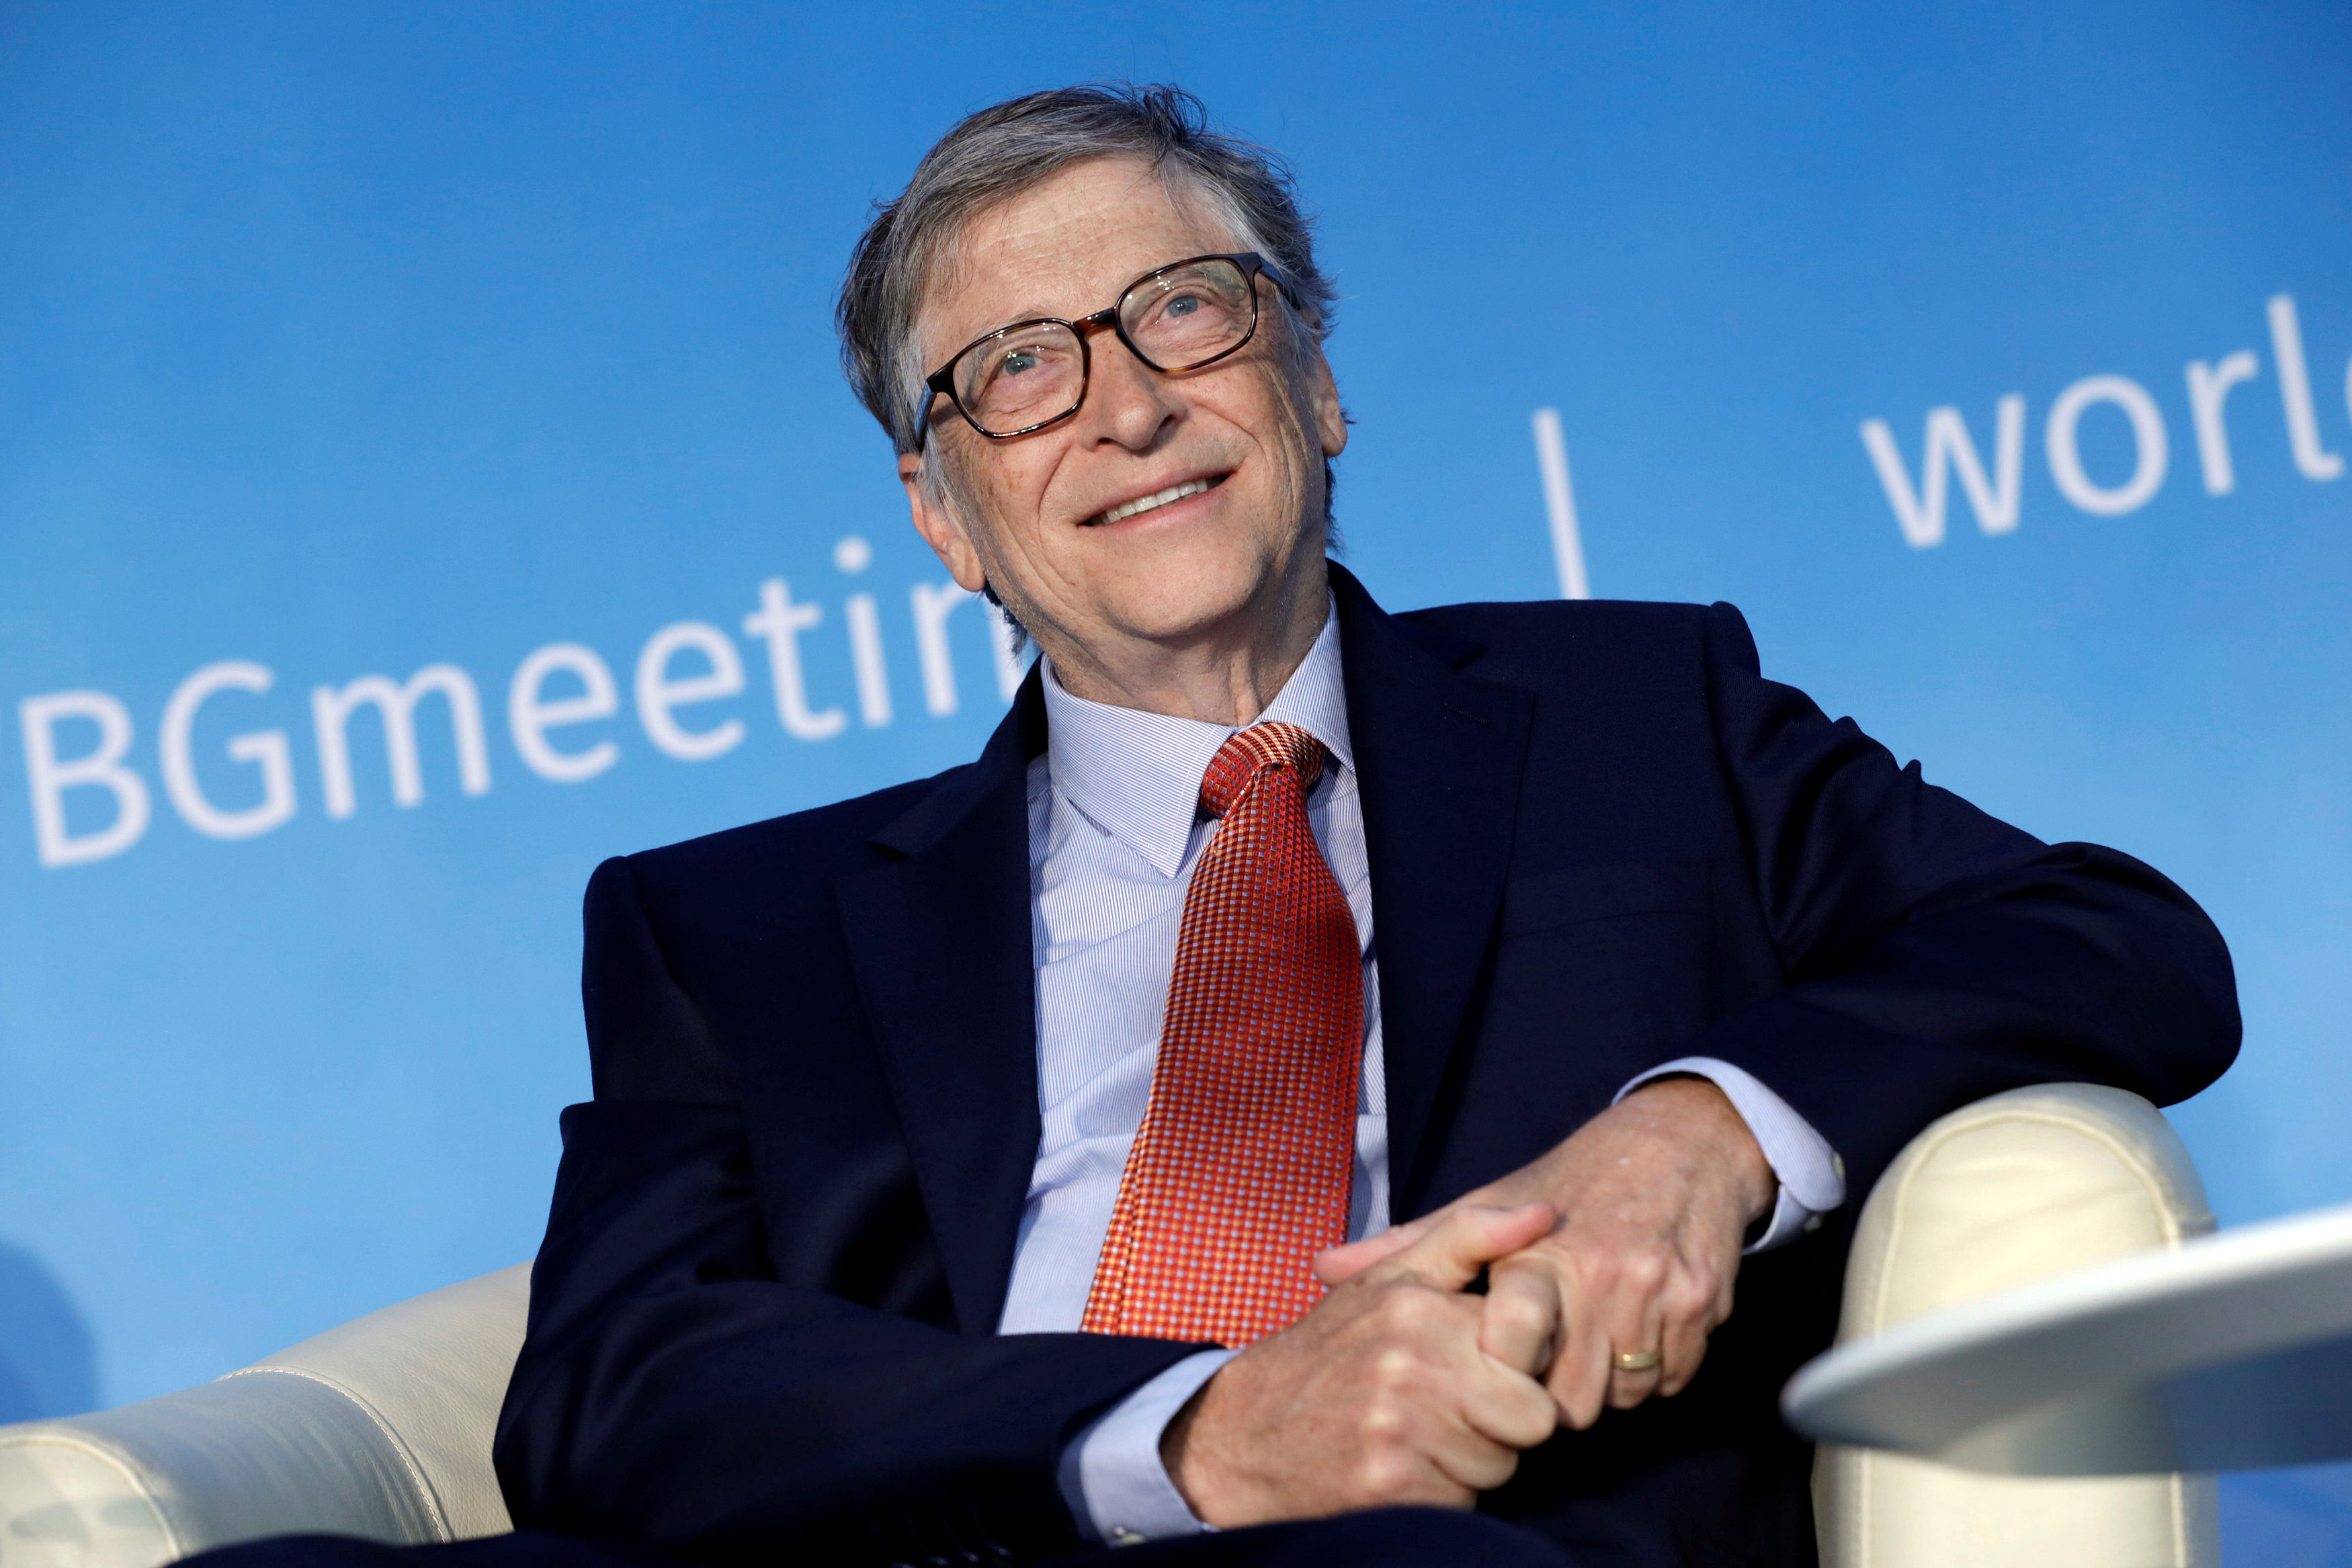  Microsoft founder Bill Gates